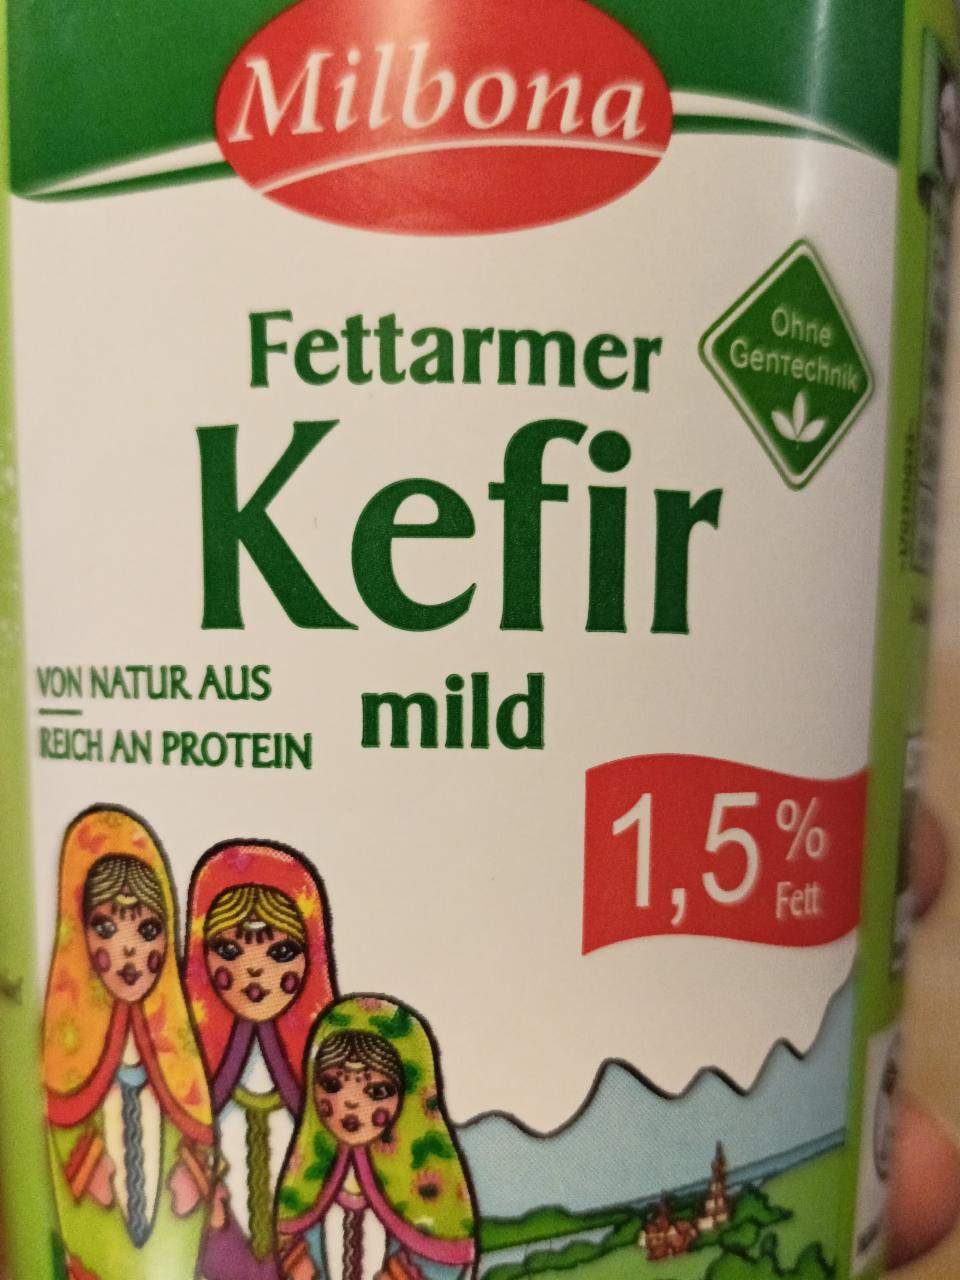 Fotografie - Fettarmer Kefir mild 1,5% Fett Milbona